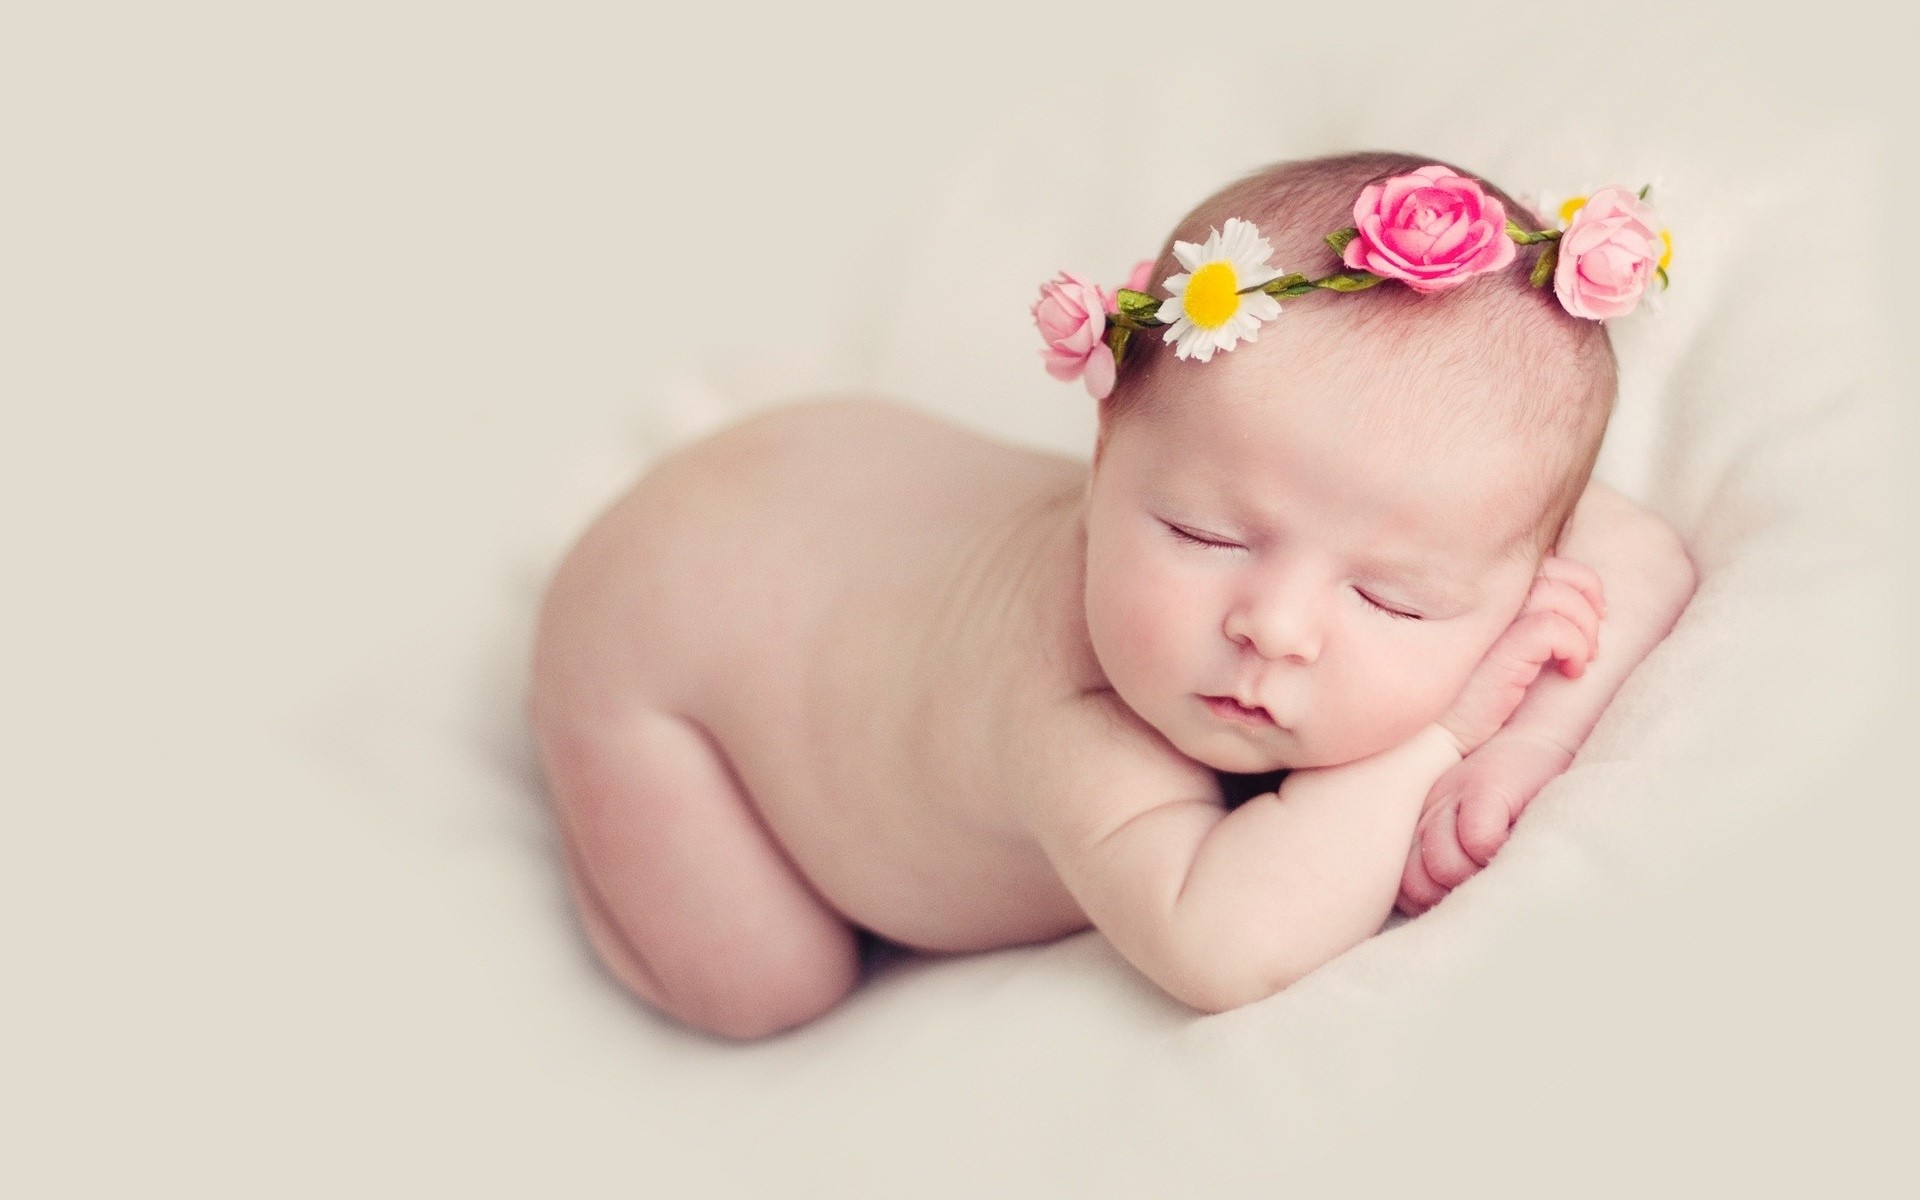 1920x1200 ... Cute Sleeping Newborn Baby Wallpapers | HD Wallpapers ...